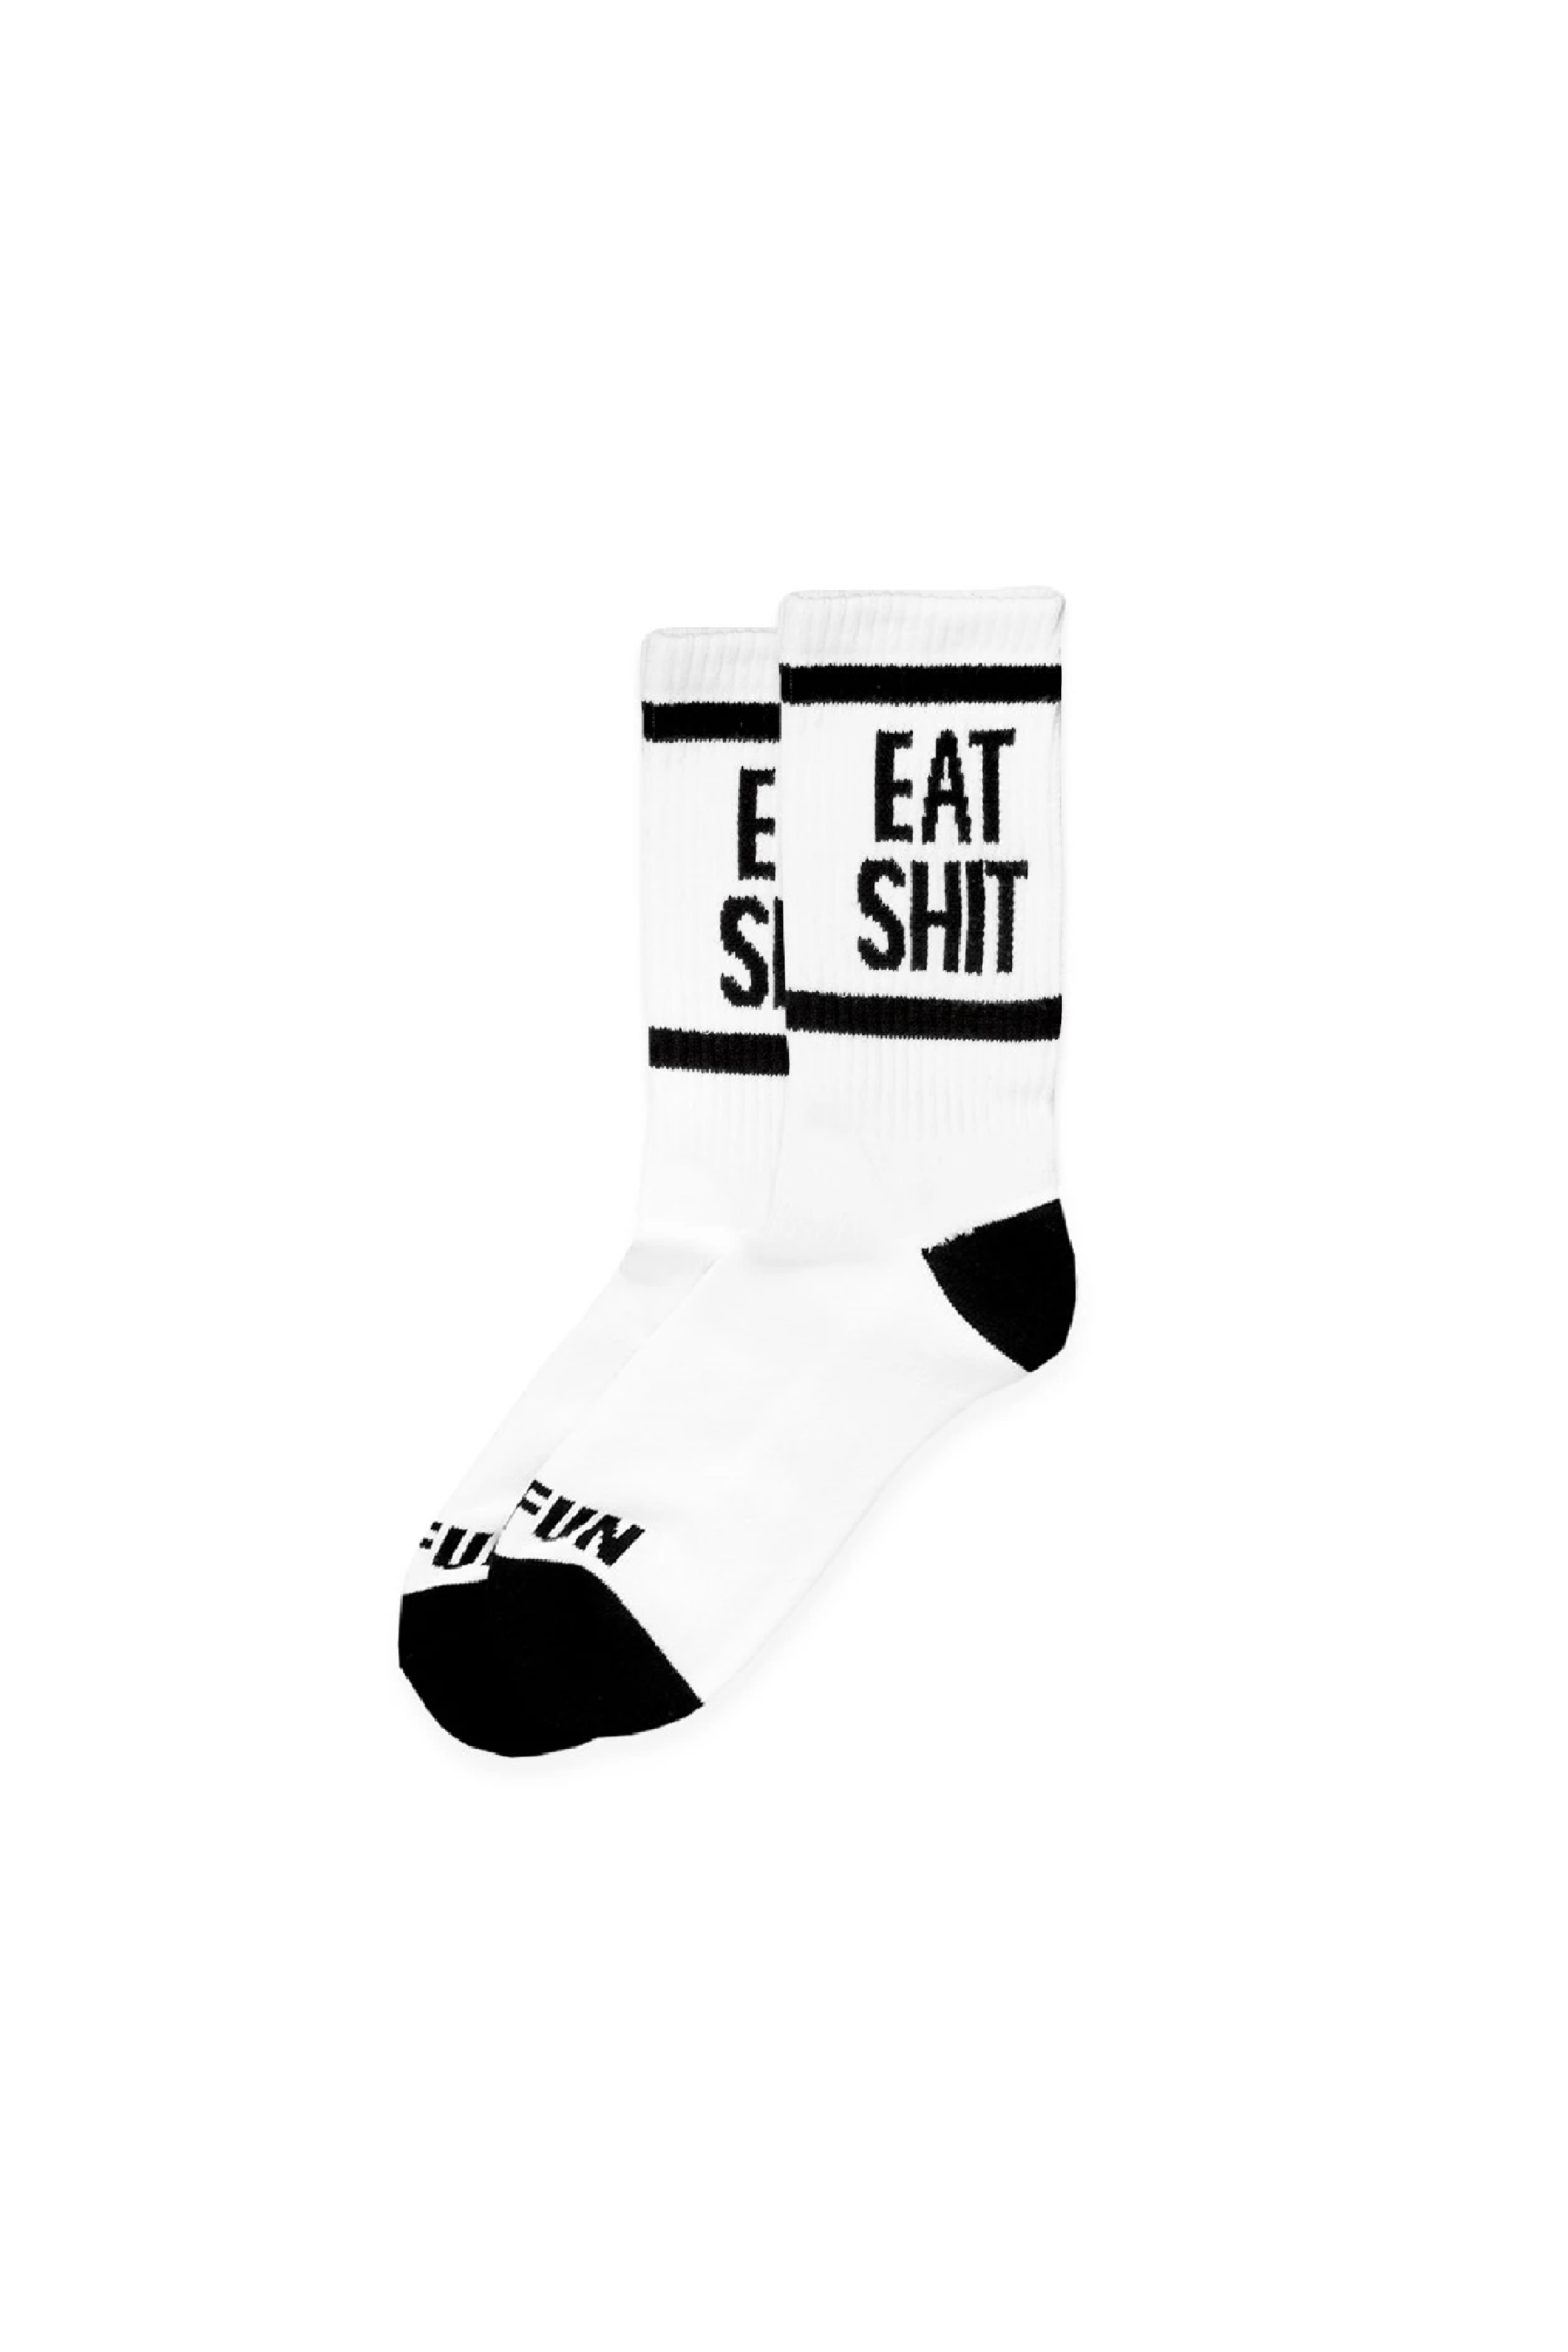 Eat Shit Socks